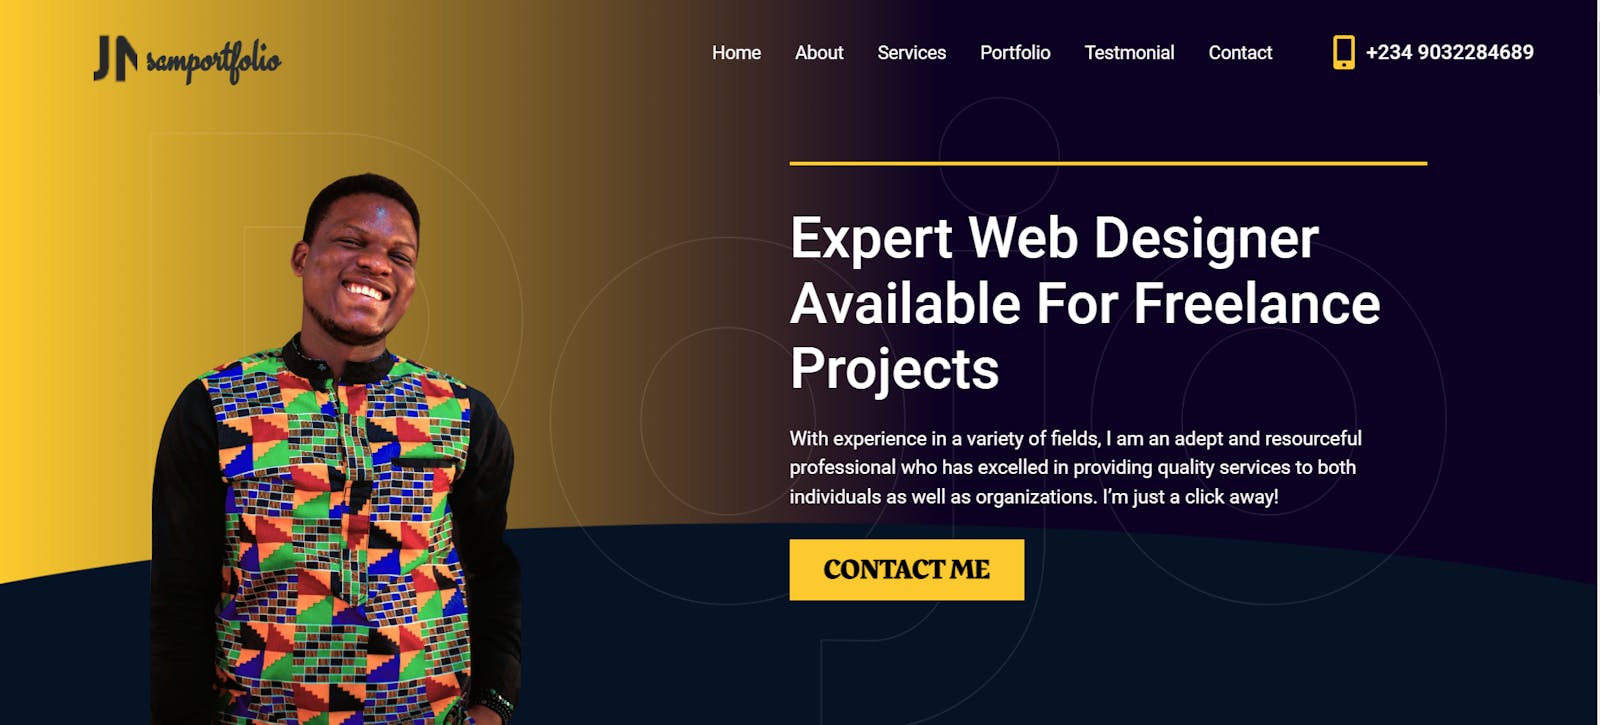 A Complete Portfolio Website Designed With Elementor Theme Builder